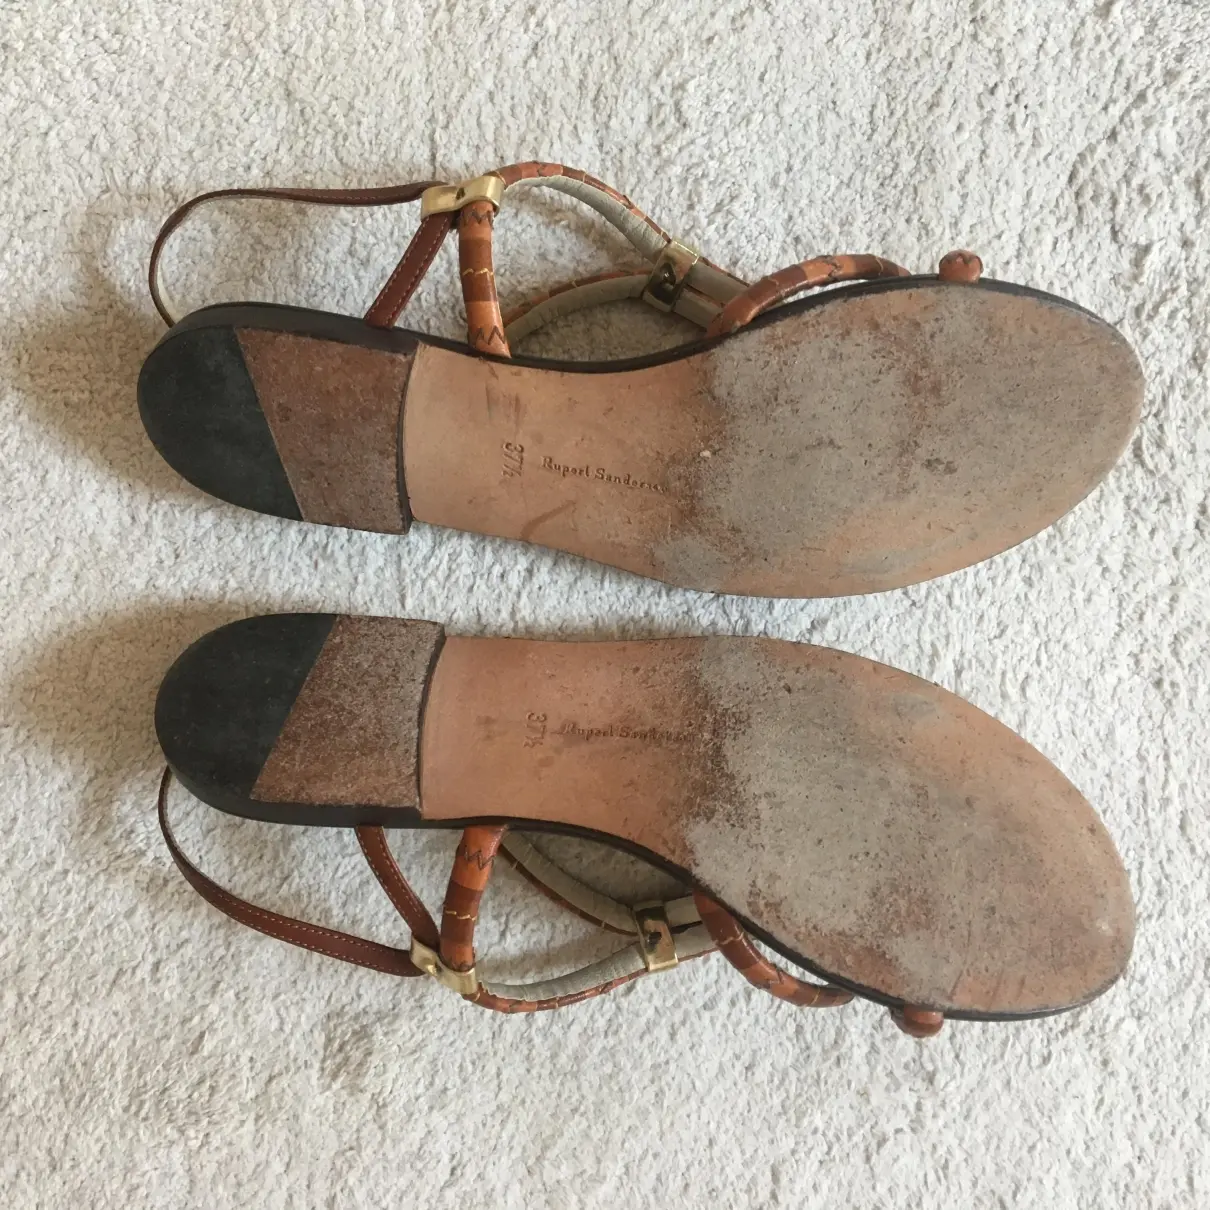 Buy Rupert Sanderson Leather sandals online